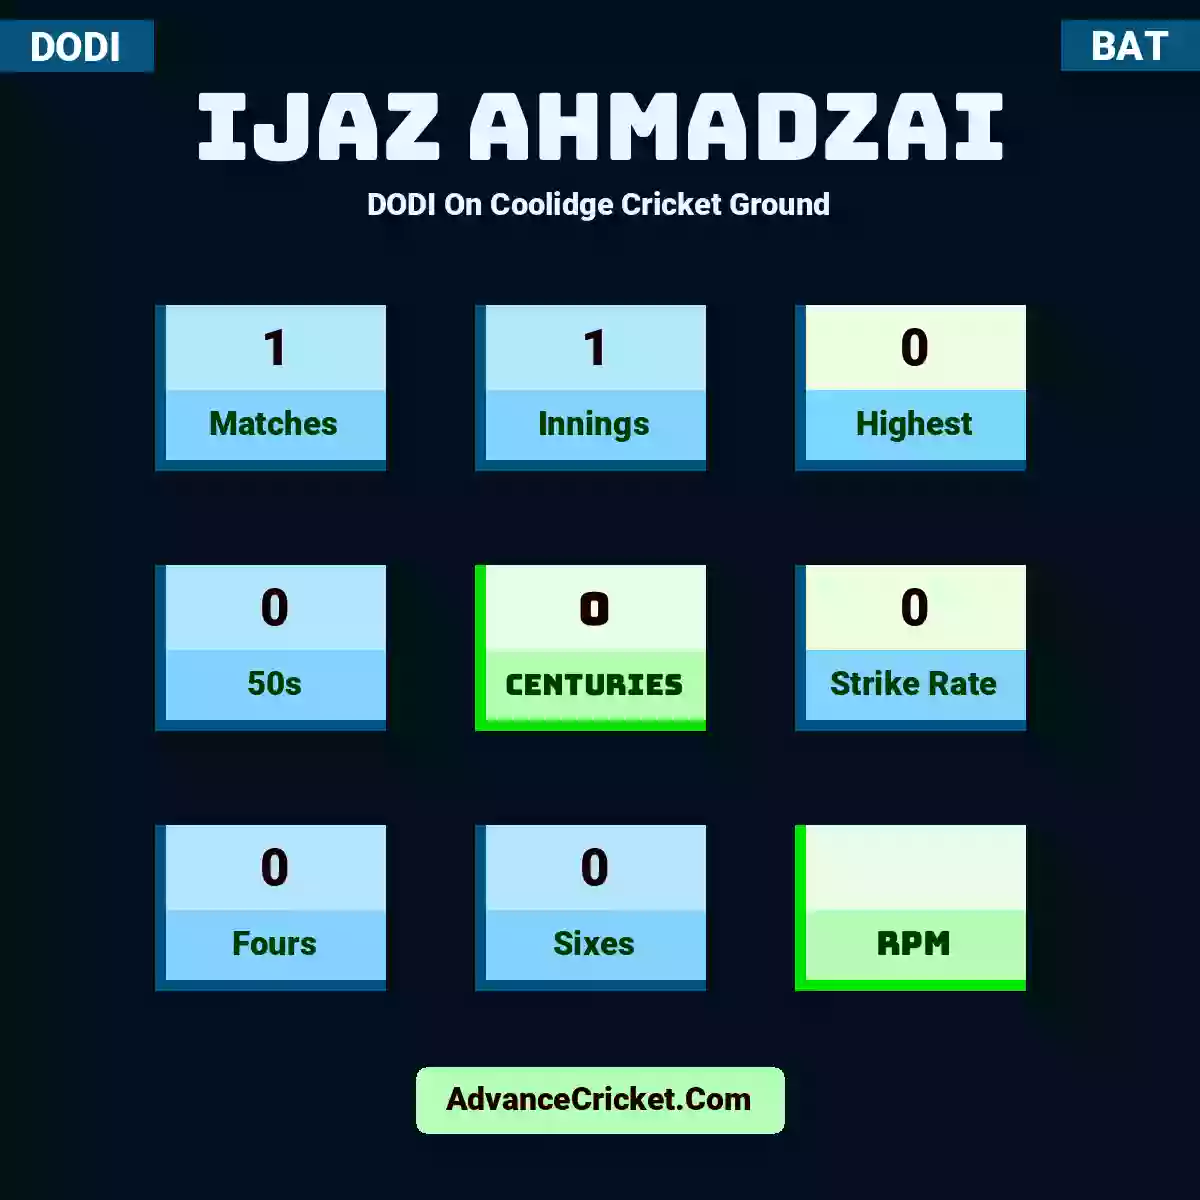 Ijaz Ahmadzai DODI  On Coolidge Cricket Ground, Ijaz Ahmadzai played 1 matches, scored 0 runs as highest, 0 half-centuries, and 0 centuries, with a strike rate of 0. I.Ahmadzai hit 0 fours and 0 sixes.